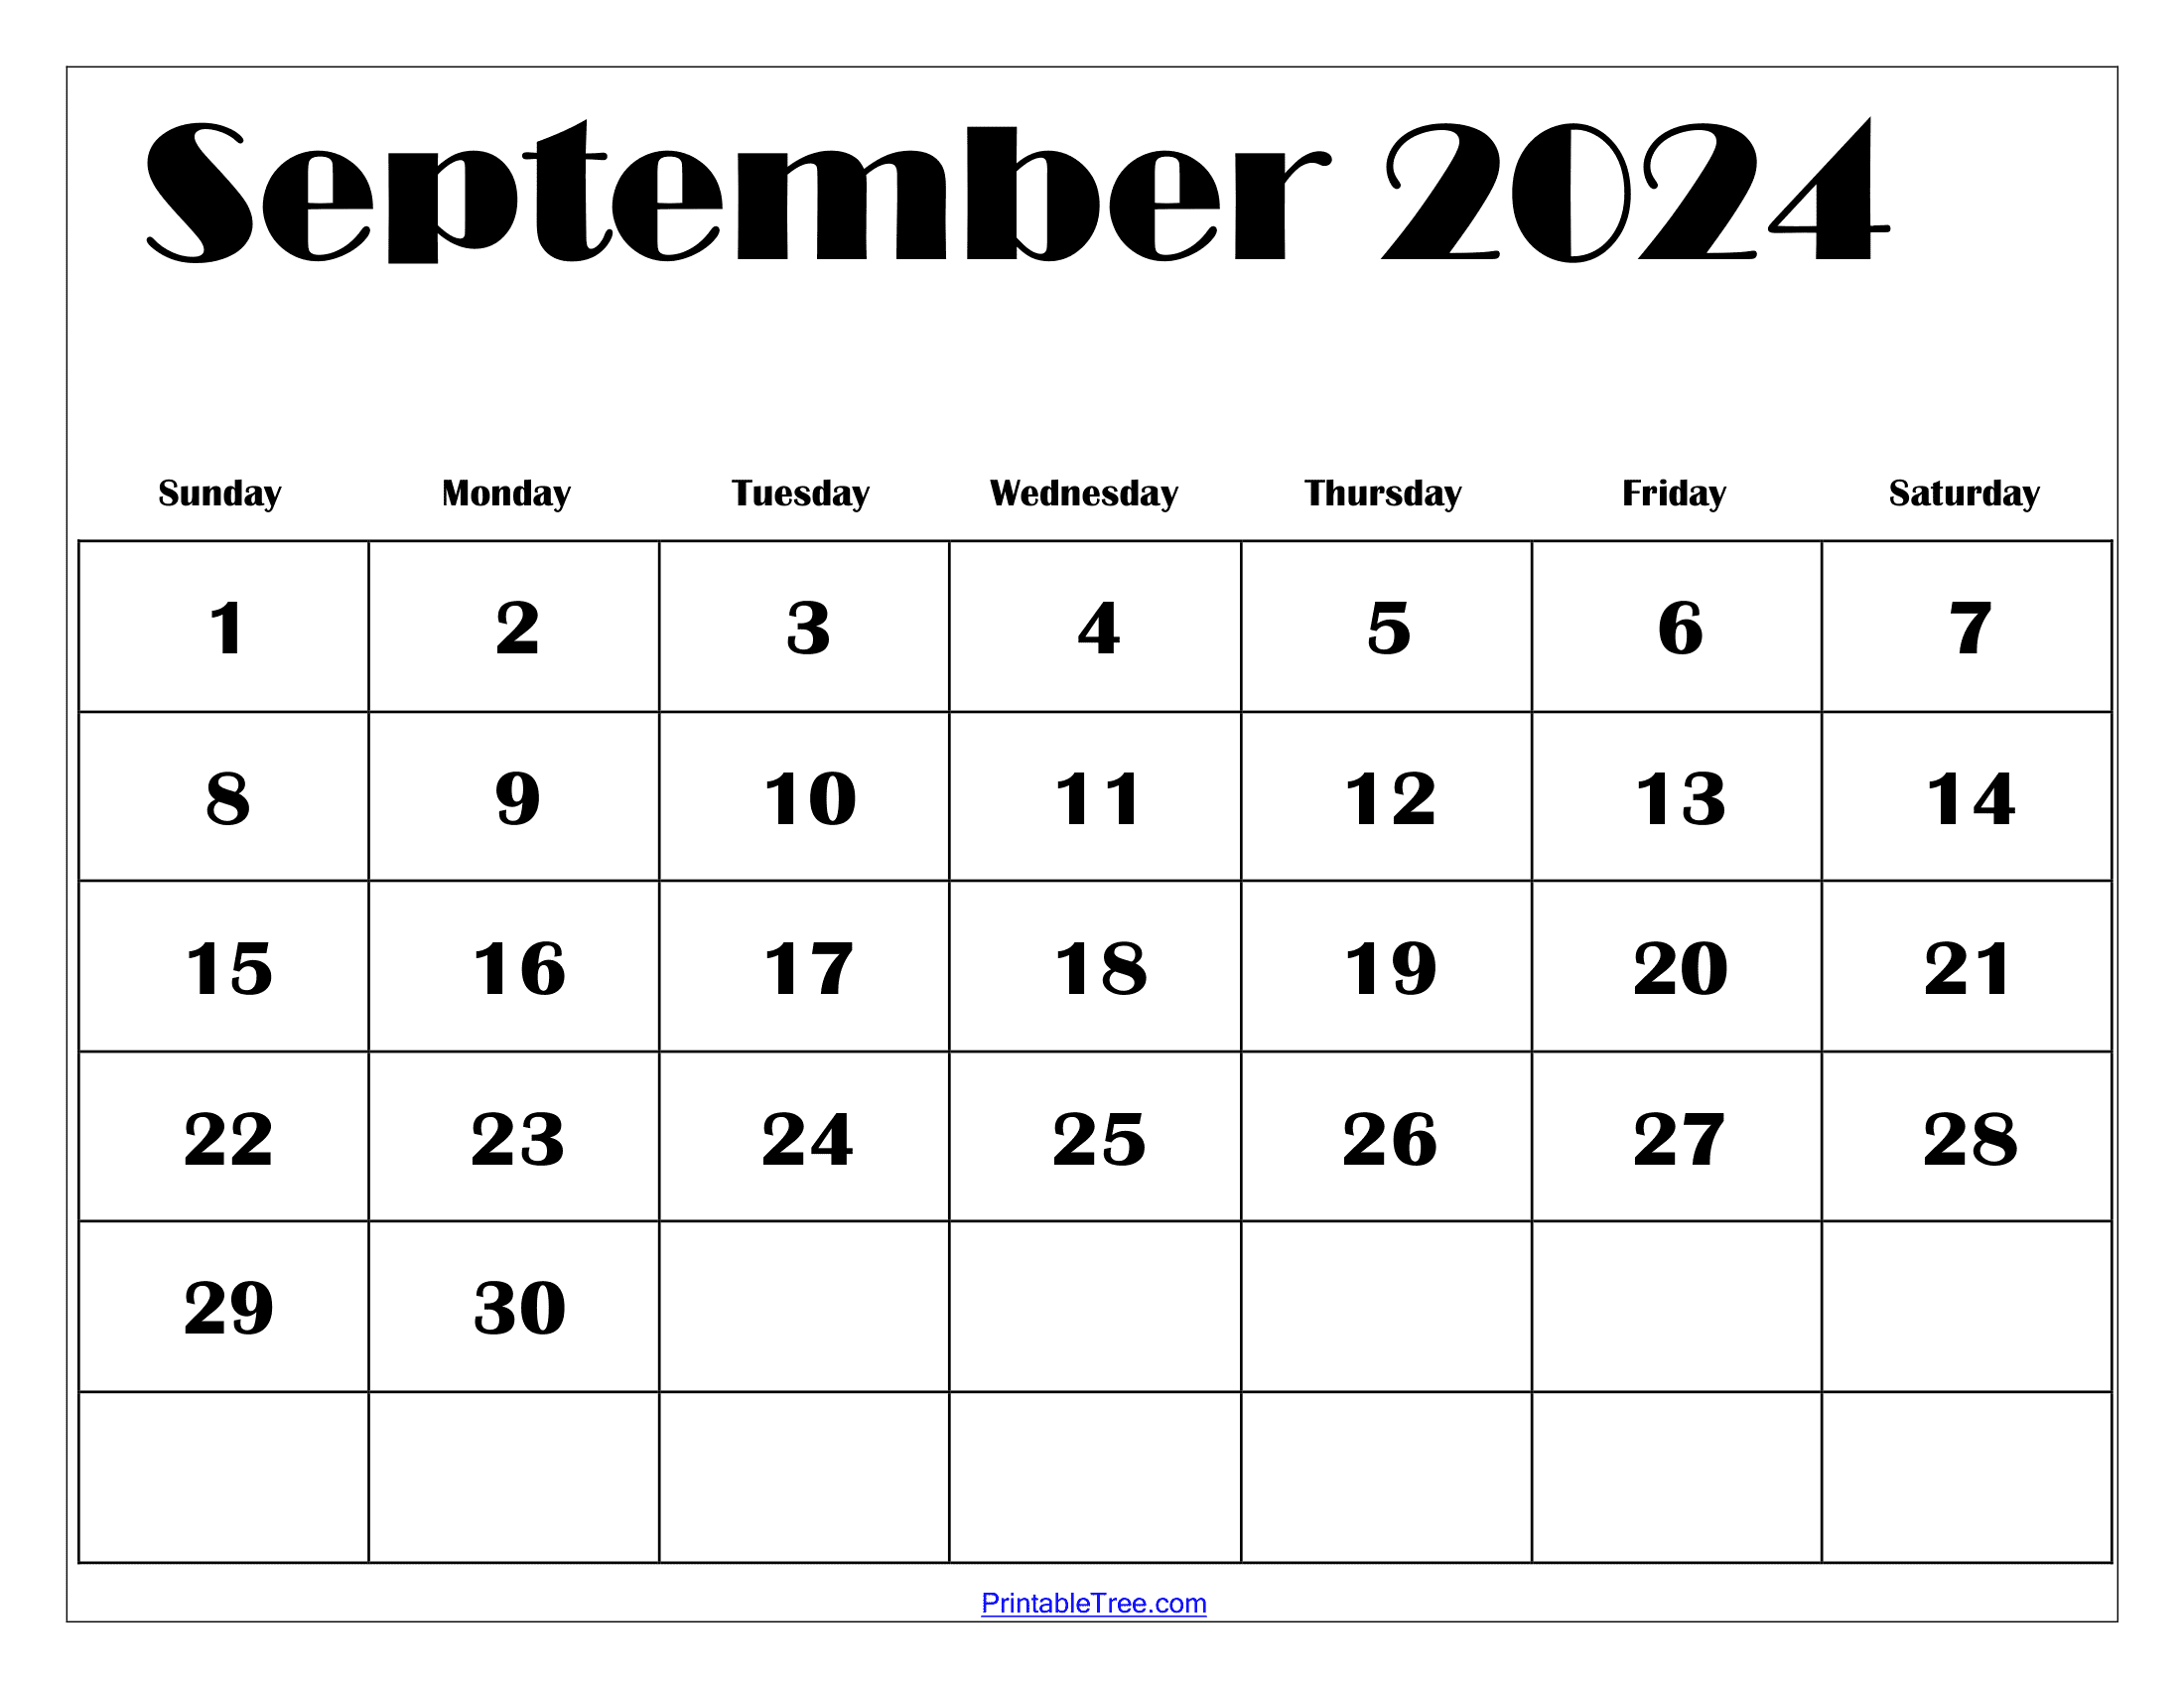 September 2024 Calendar Printable Pdf With Holidays for September 2024 Calendar Printable